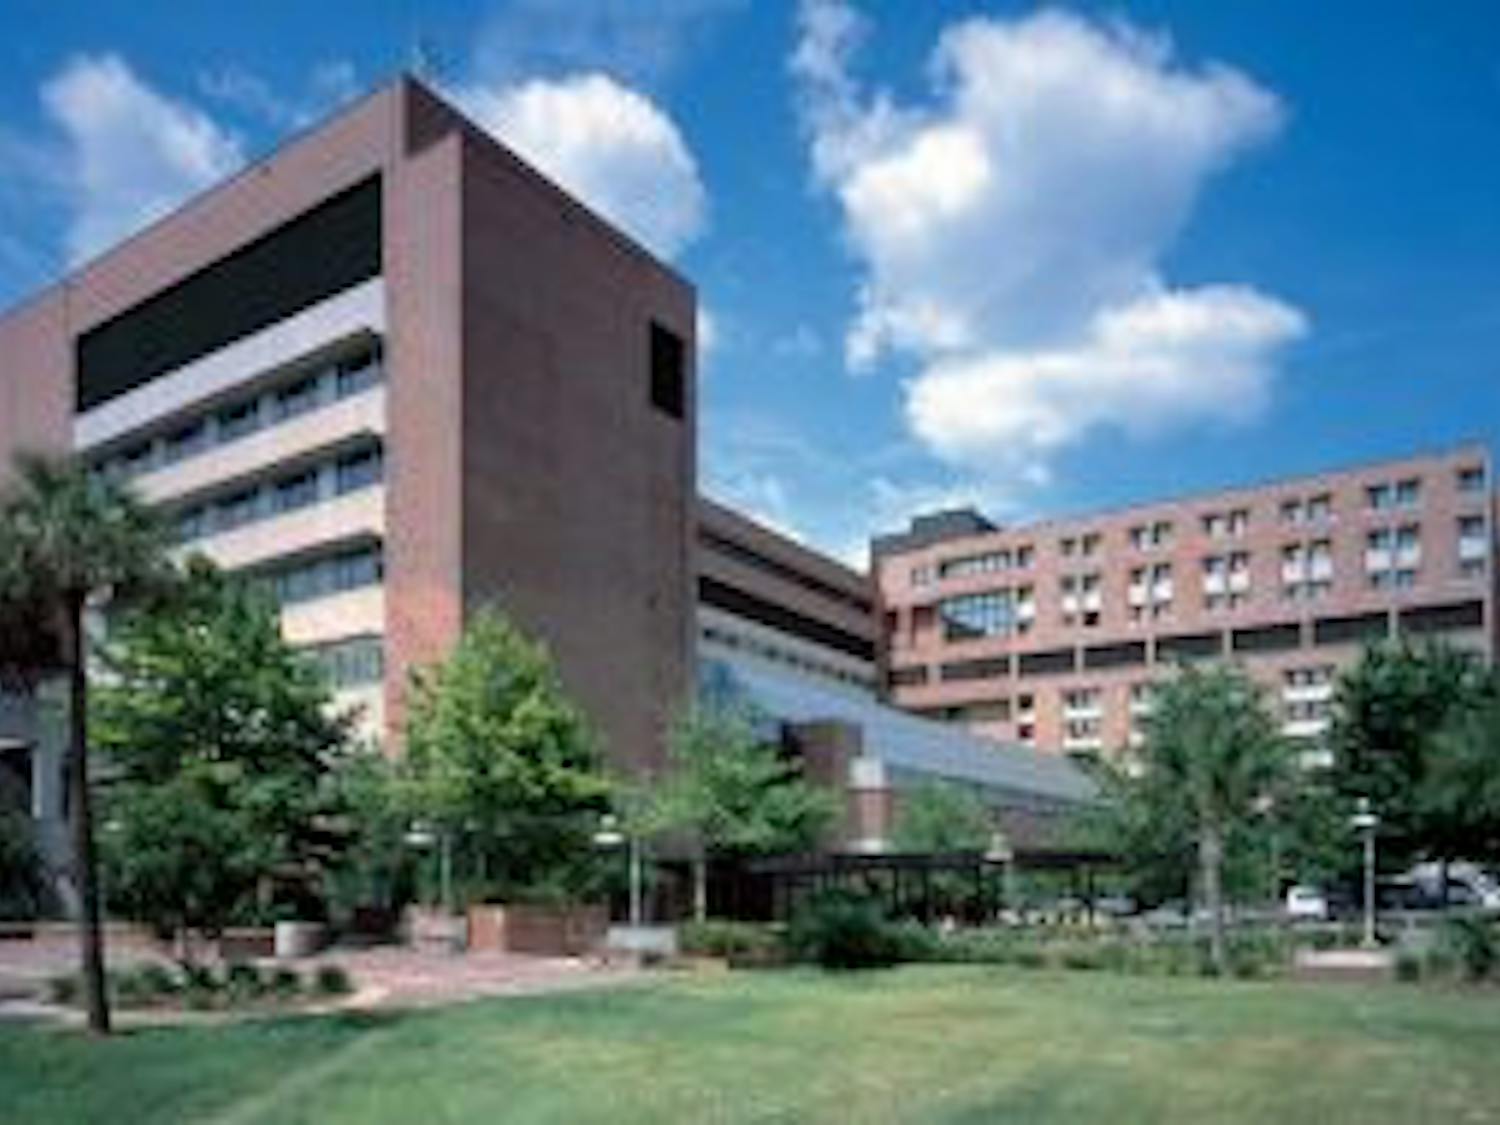 UF Health Shands Hospital